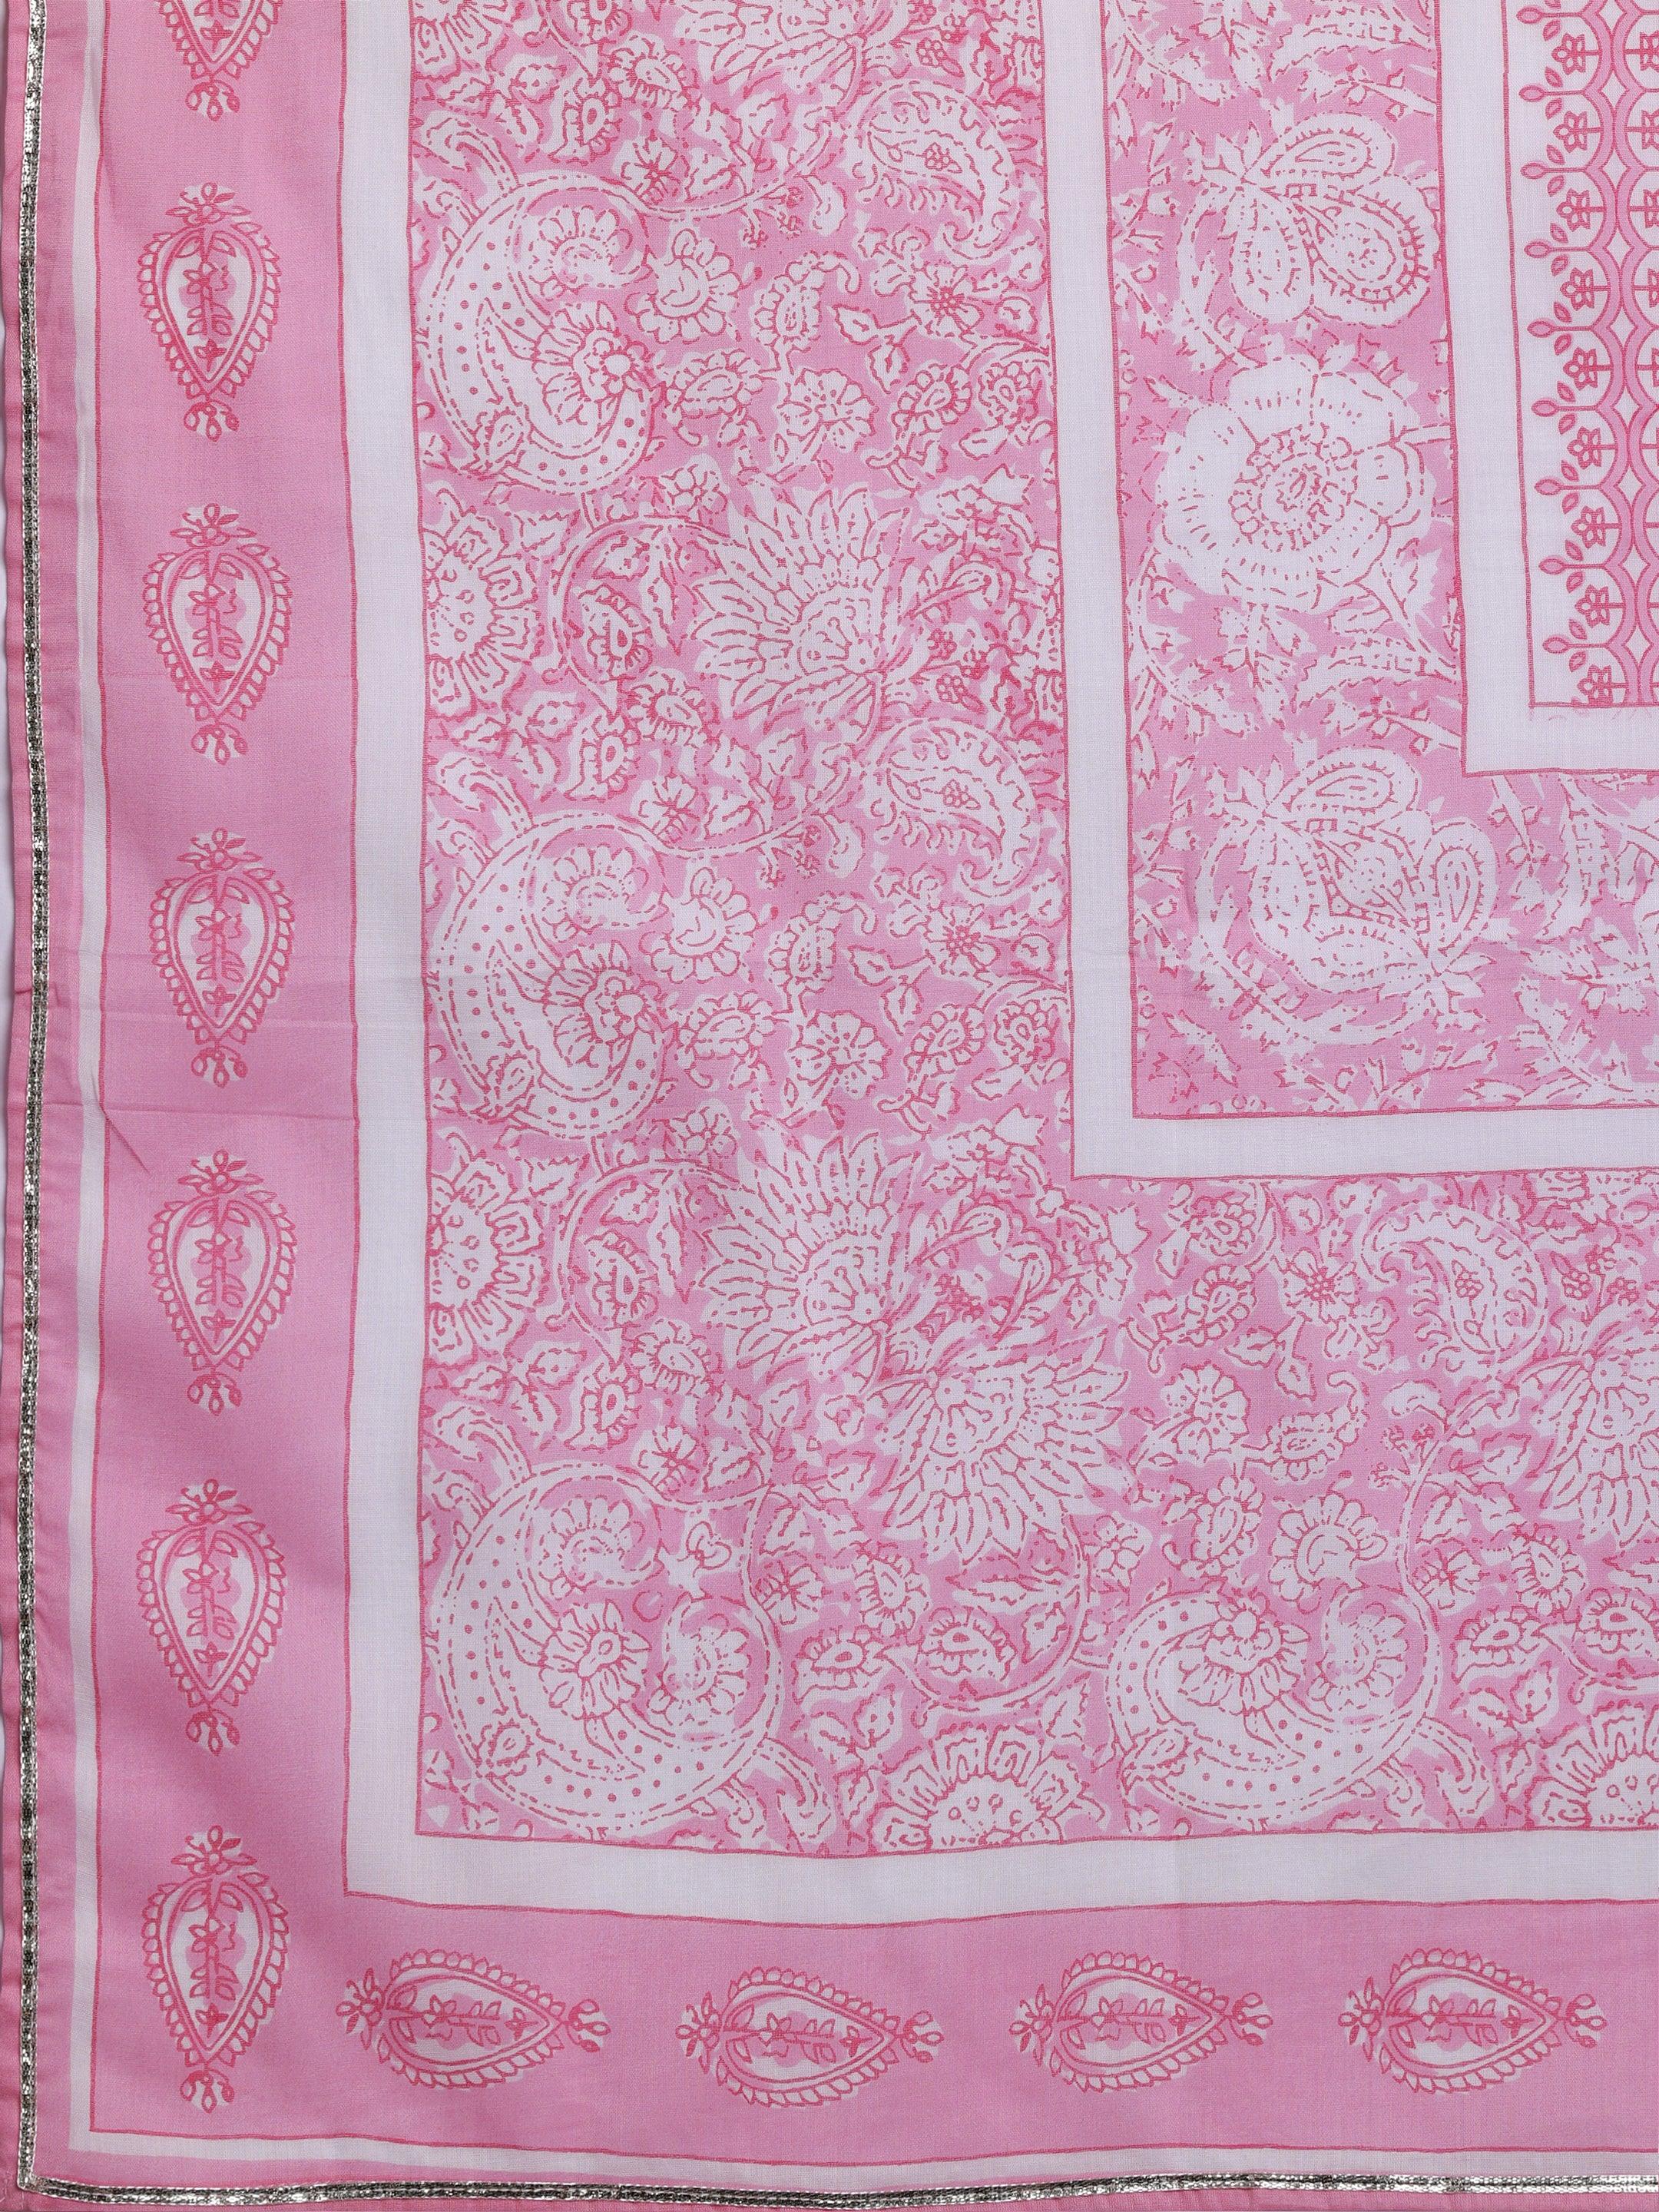 Pink Yoke Design Cotton Straight Suit With Dupatta